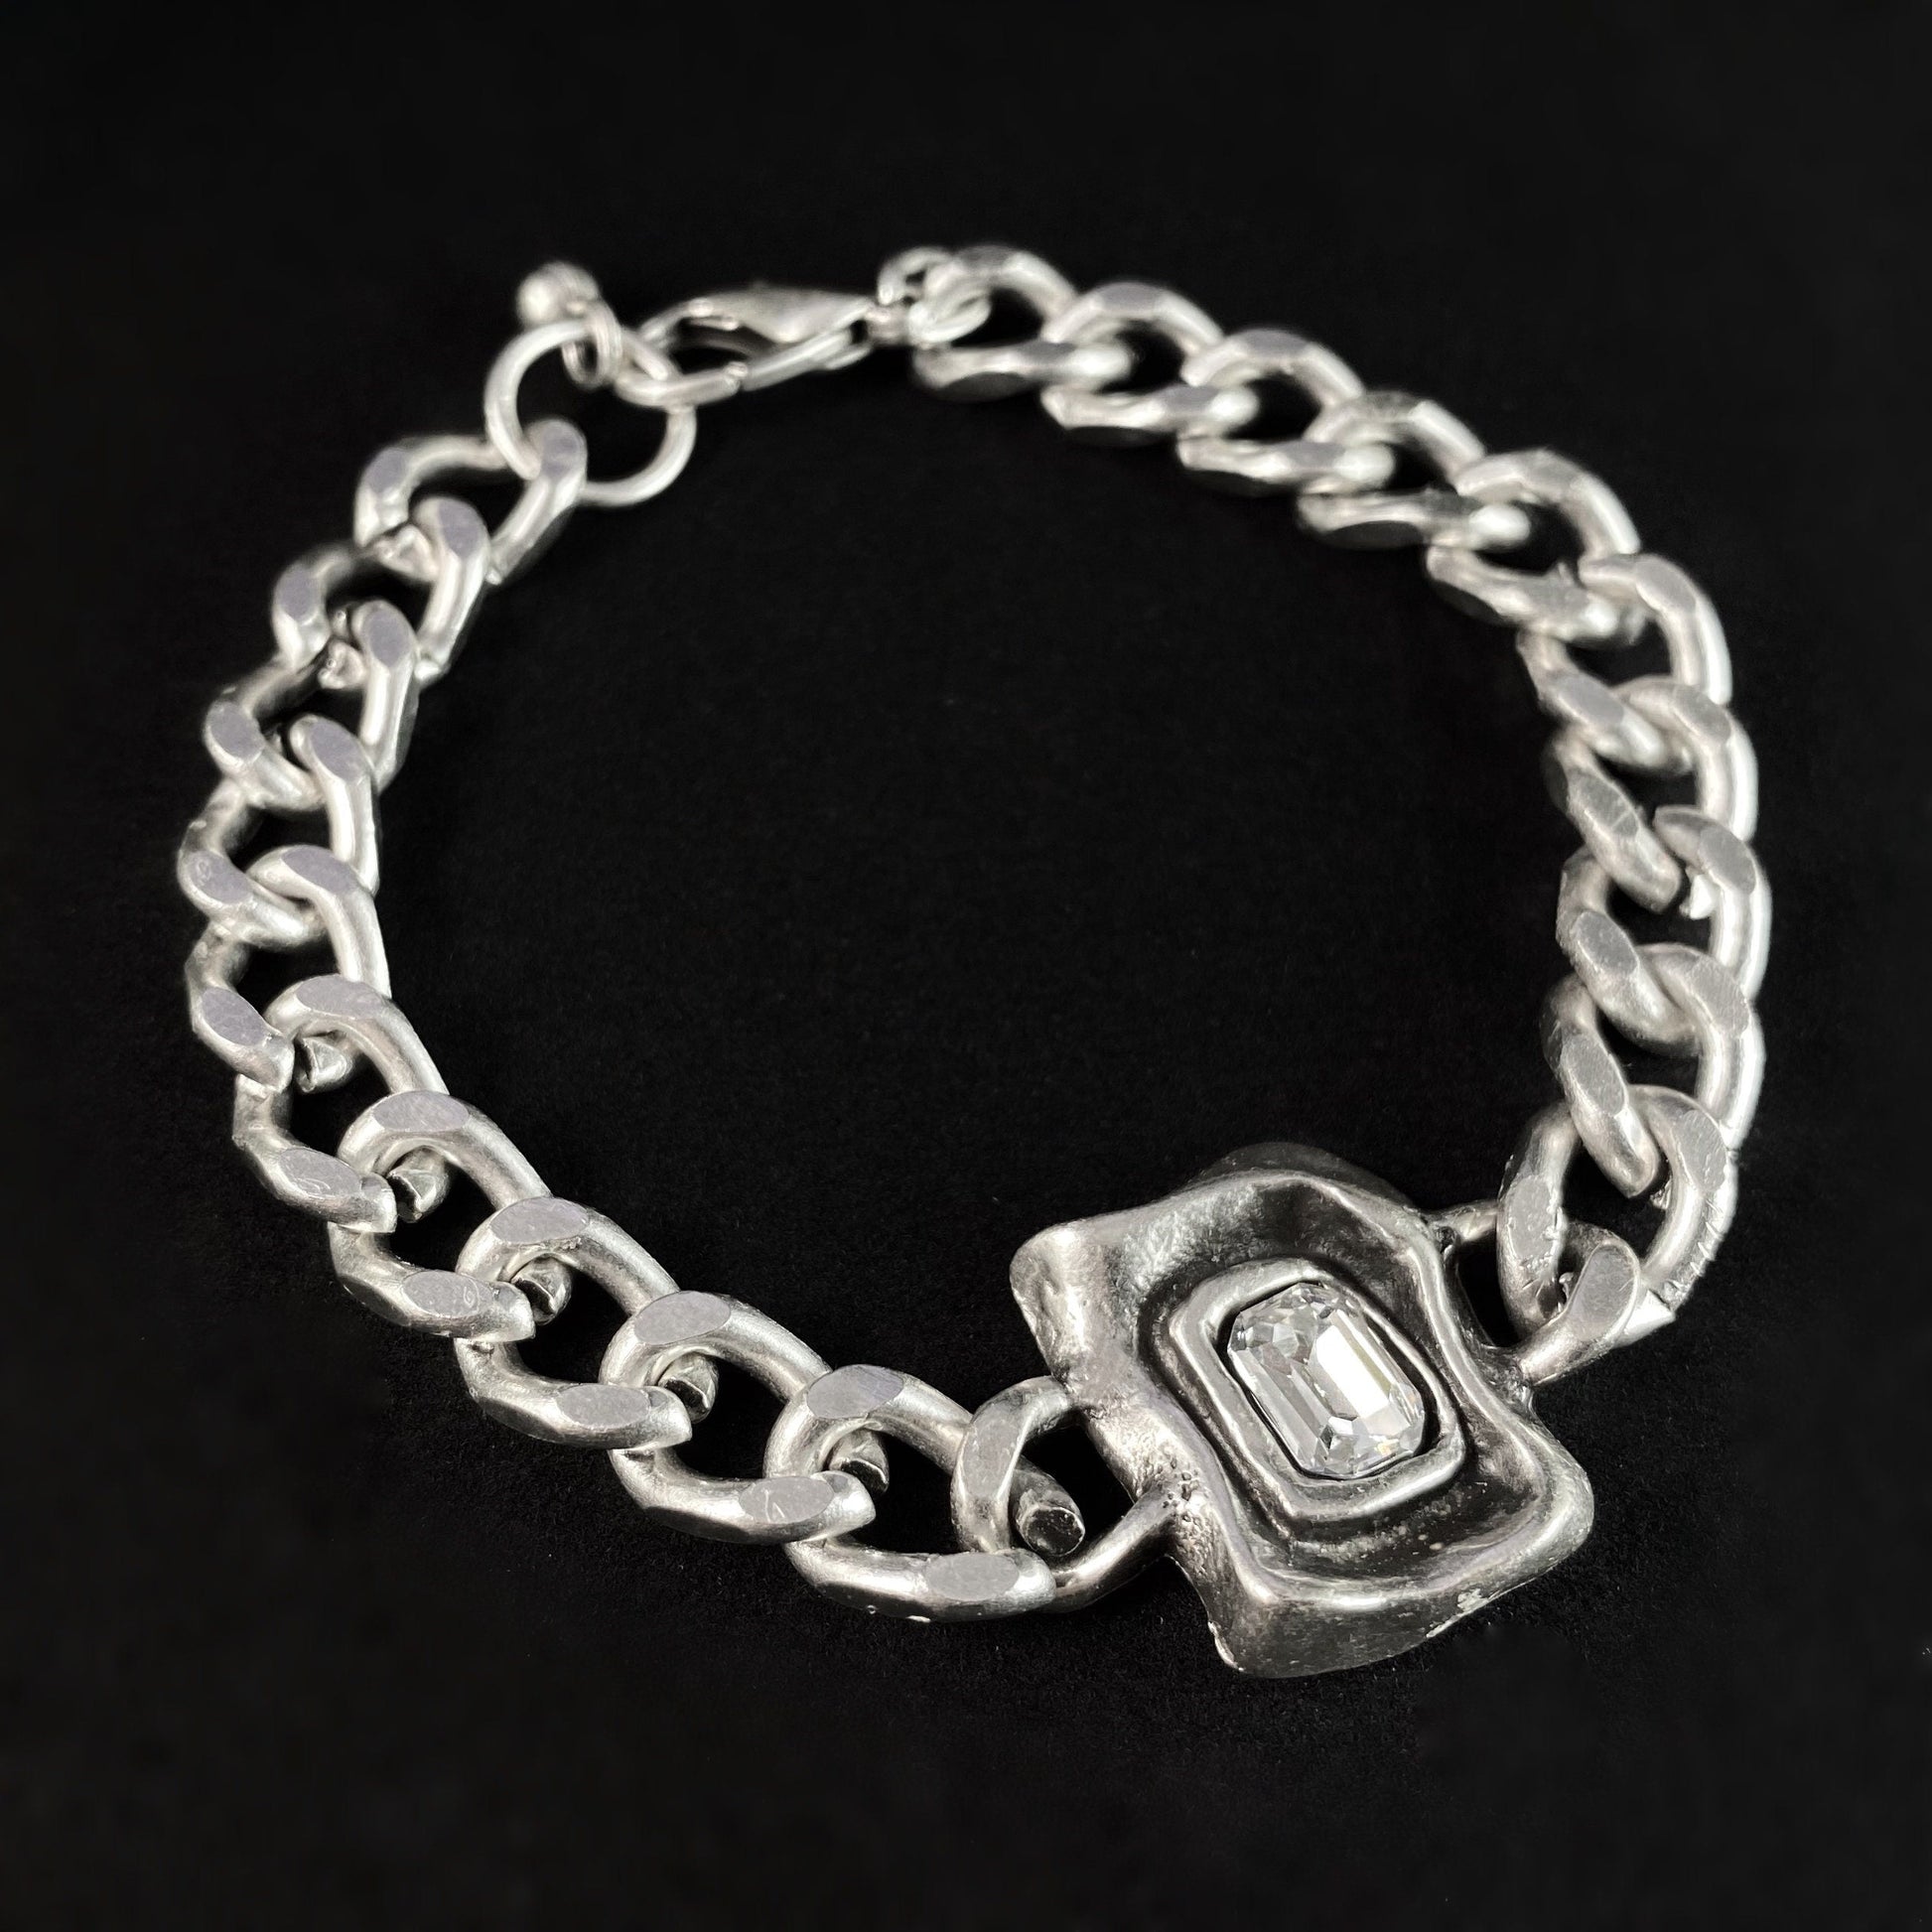 Silver Link Bracelet with Clear Crystal, Handmade, Nickel Free